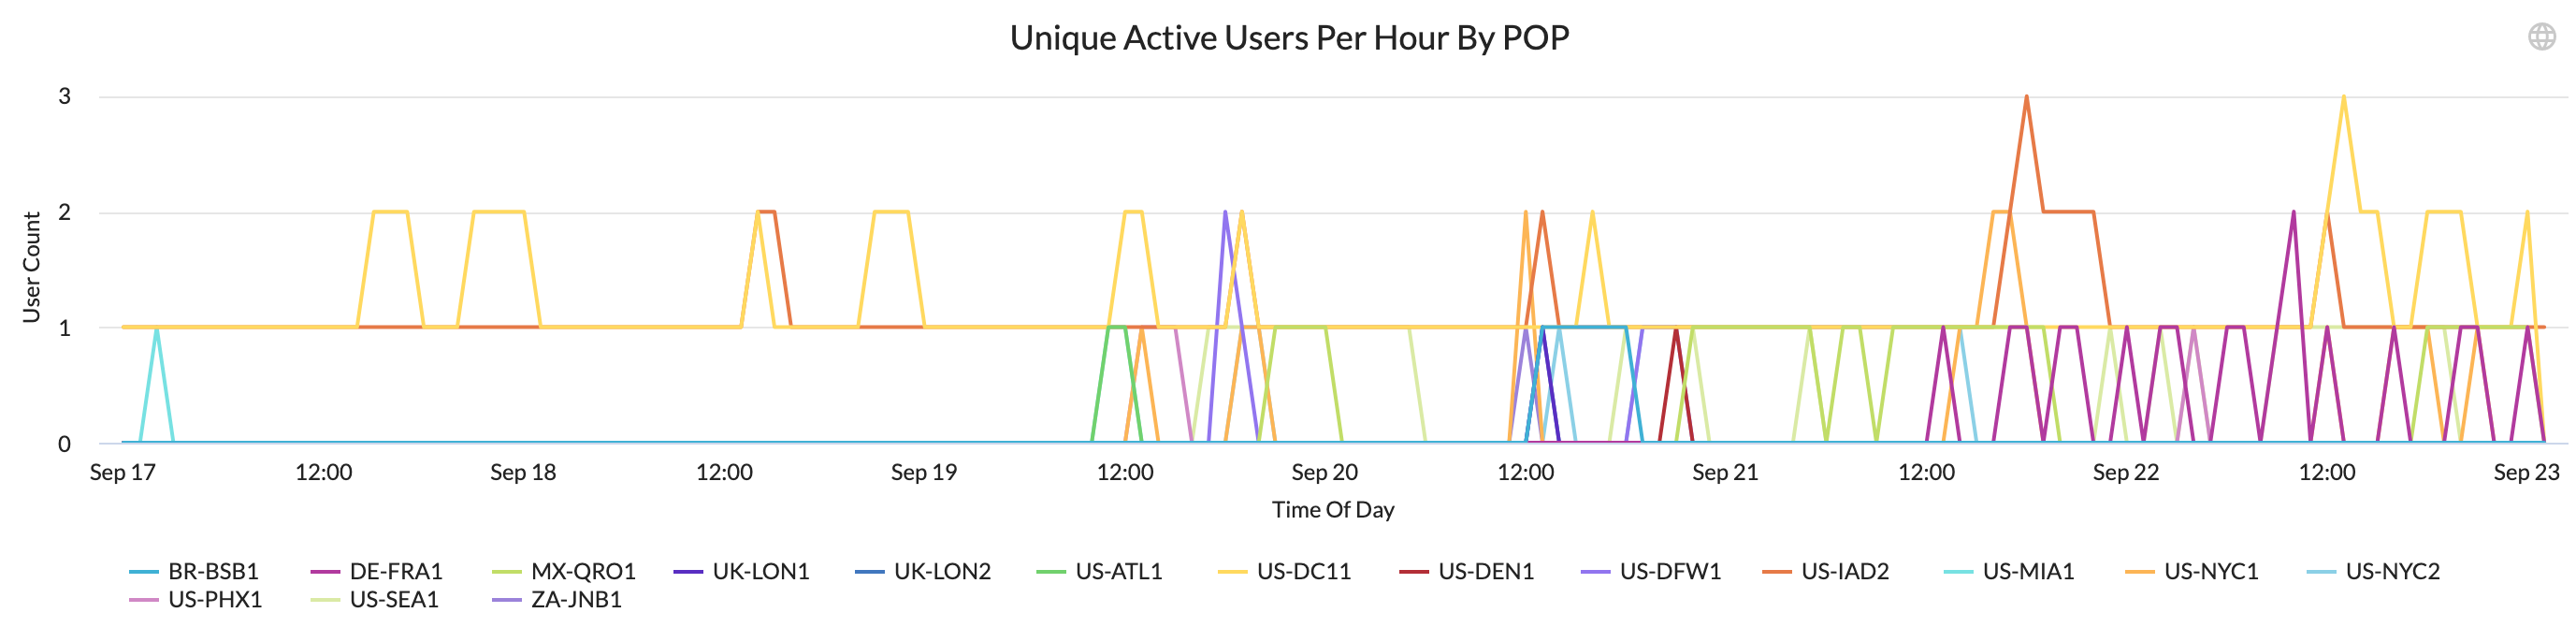 Netskope-DEM-Digital-Experience-Managment-Unique-Active-Users-Per-Hour-By-POP-Widget.png